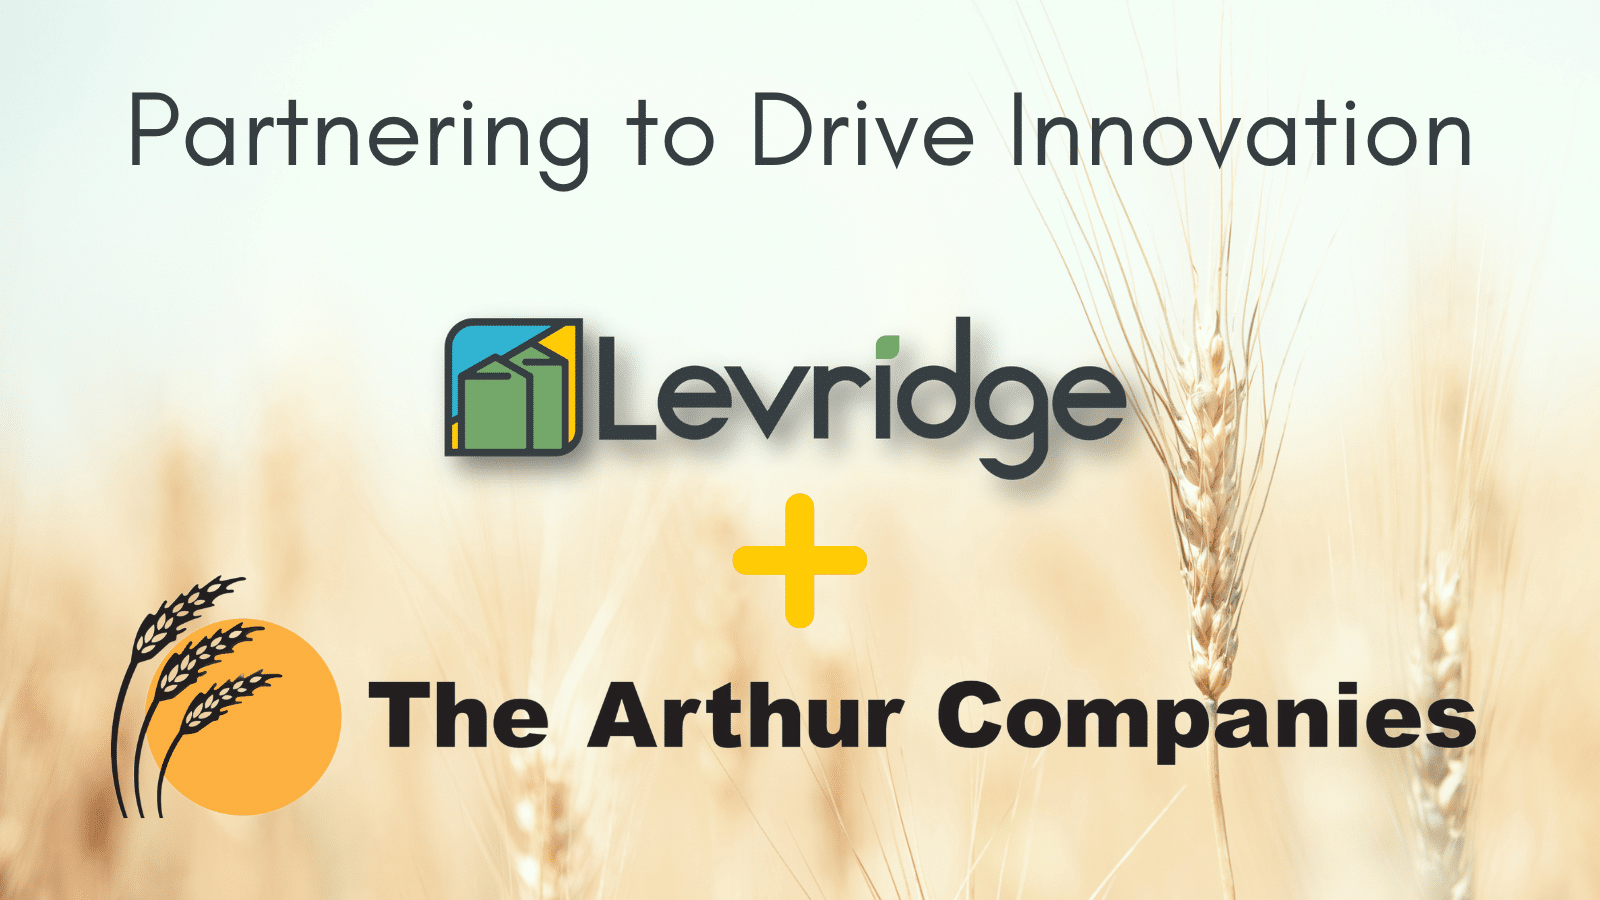 Levridge and Arthur Partner to Drive Innovation